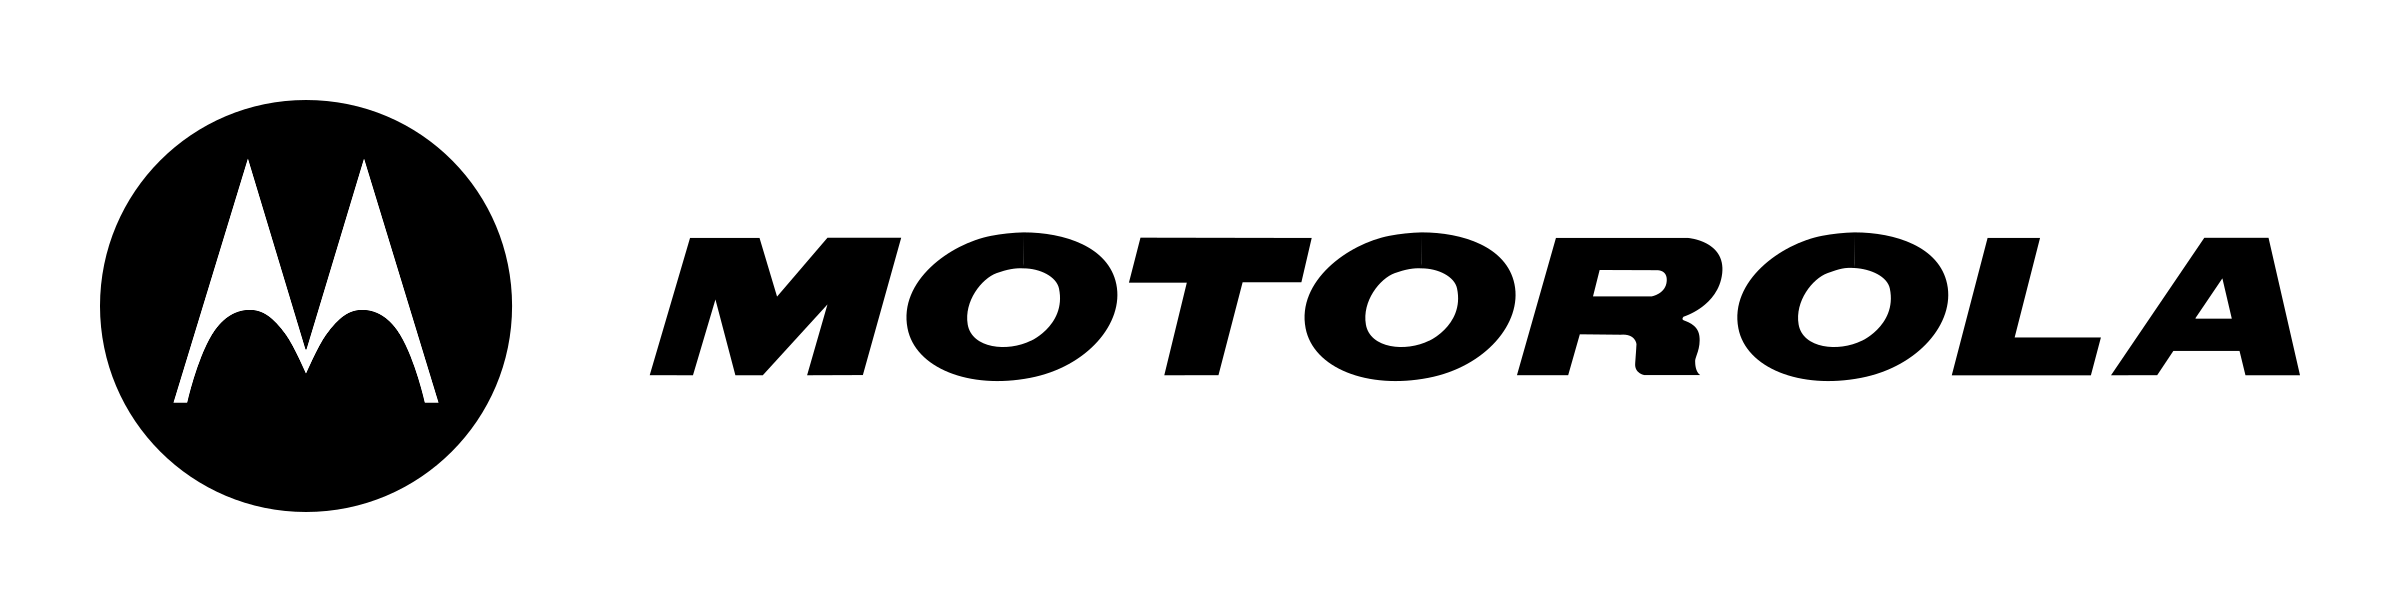 Who Owns the Motorola Logo - File:Motorola-logo-black-and-white.png - Wikimedia Commons